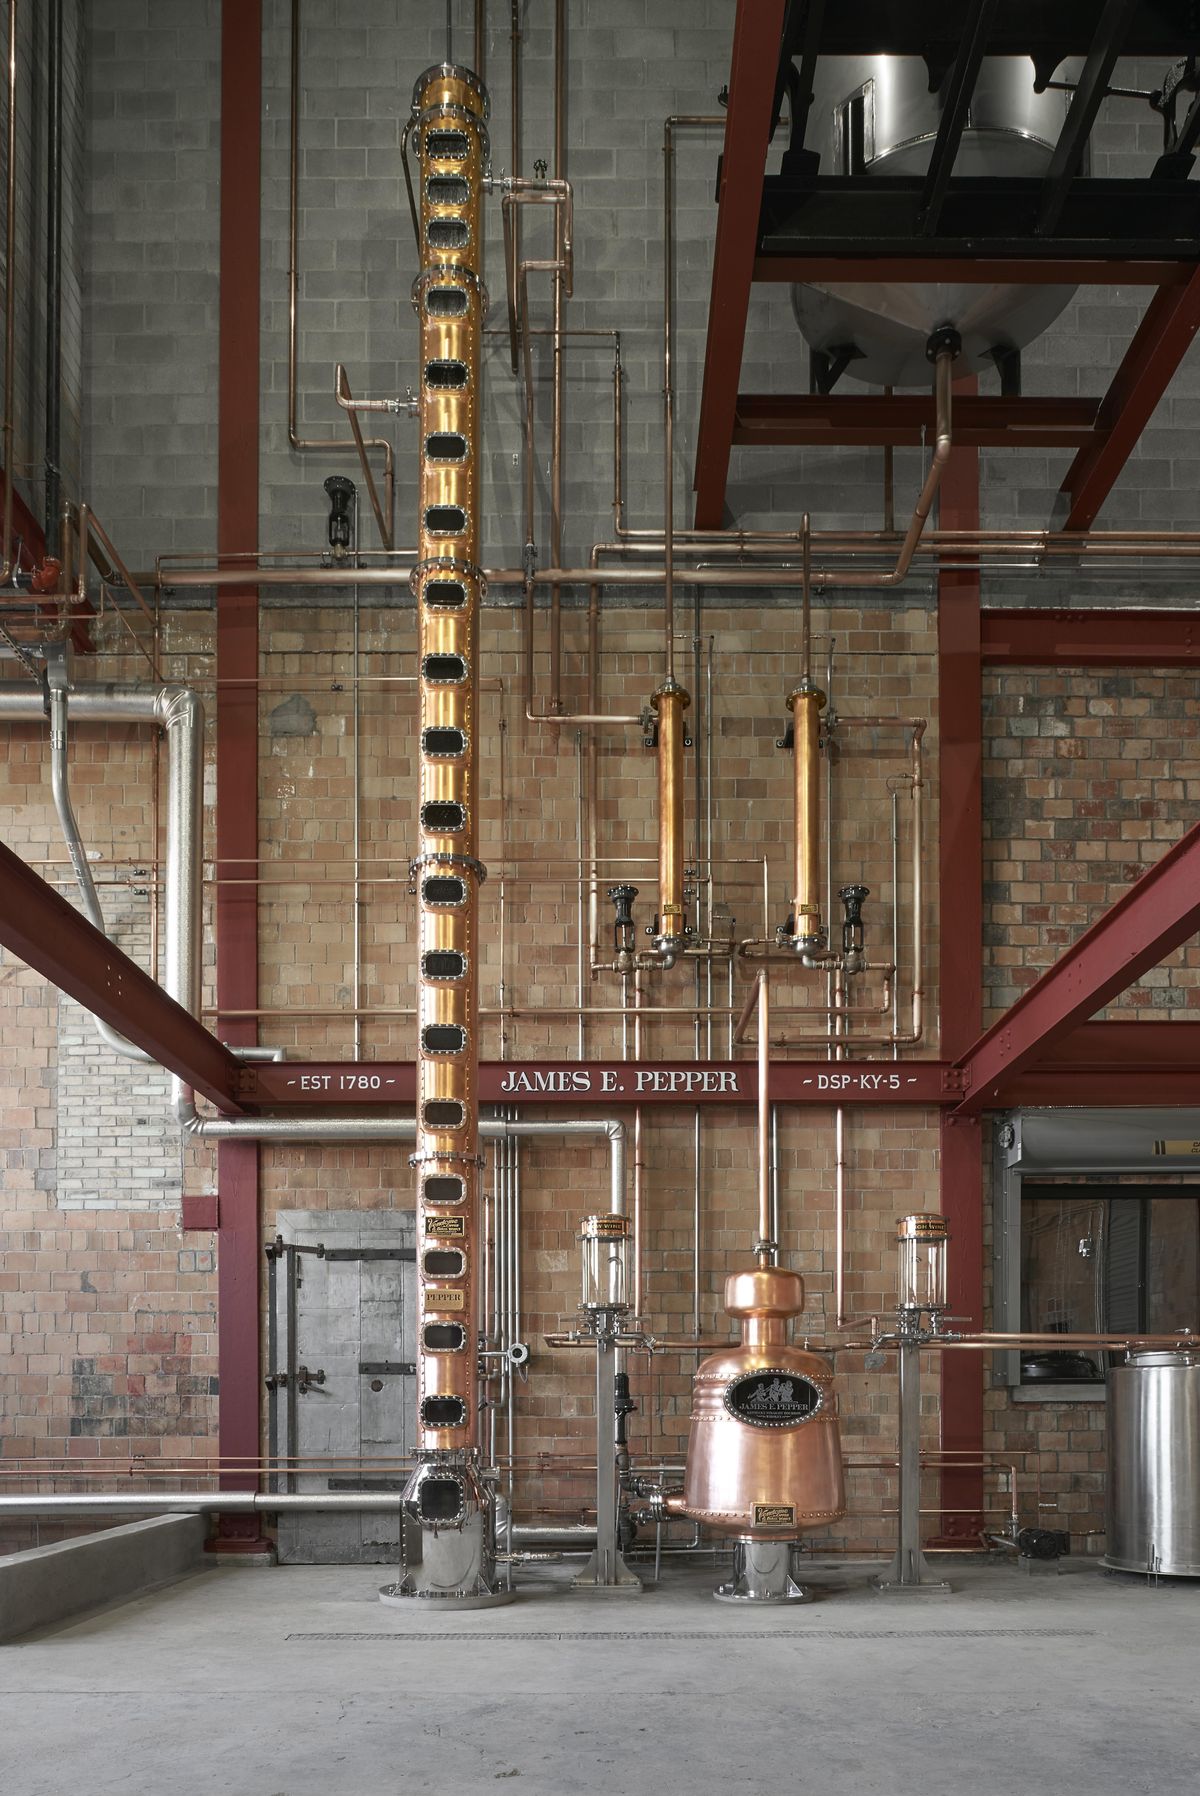 The custom-made Vendome copper still at the James E. Pepper Distillery. (VisitLEX / TNS)